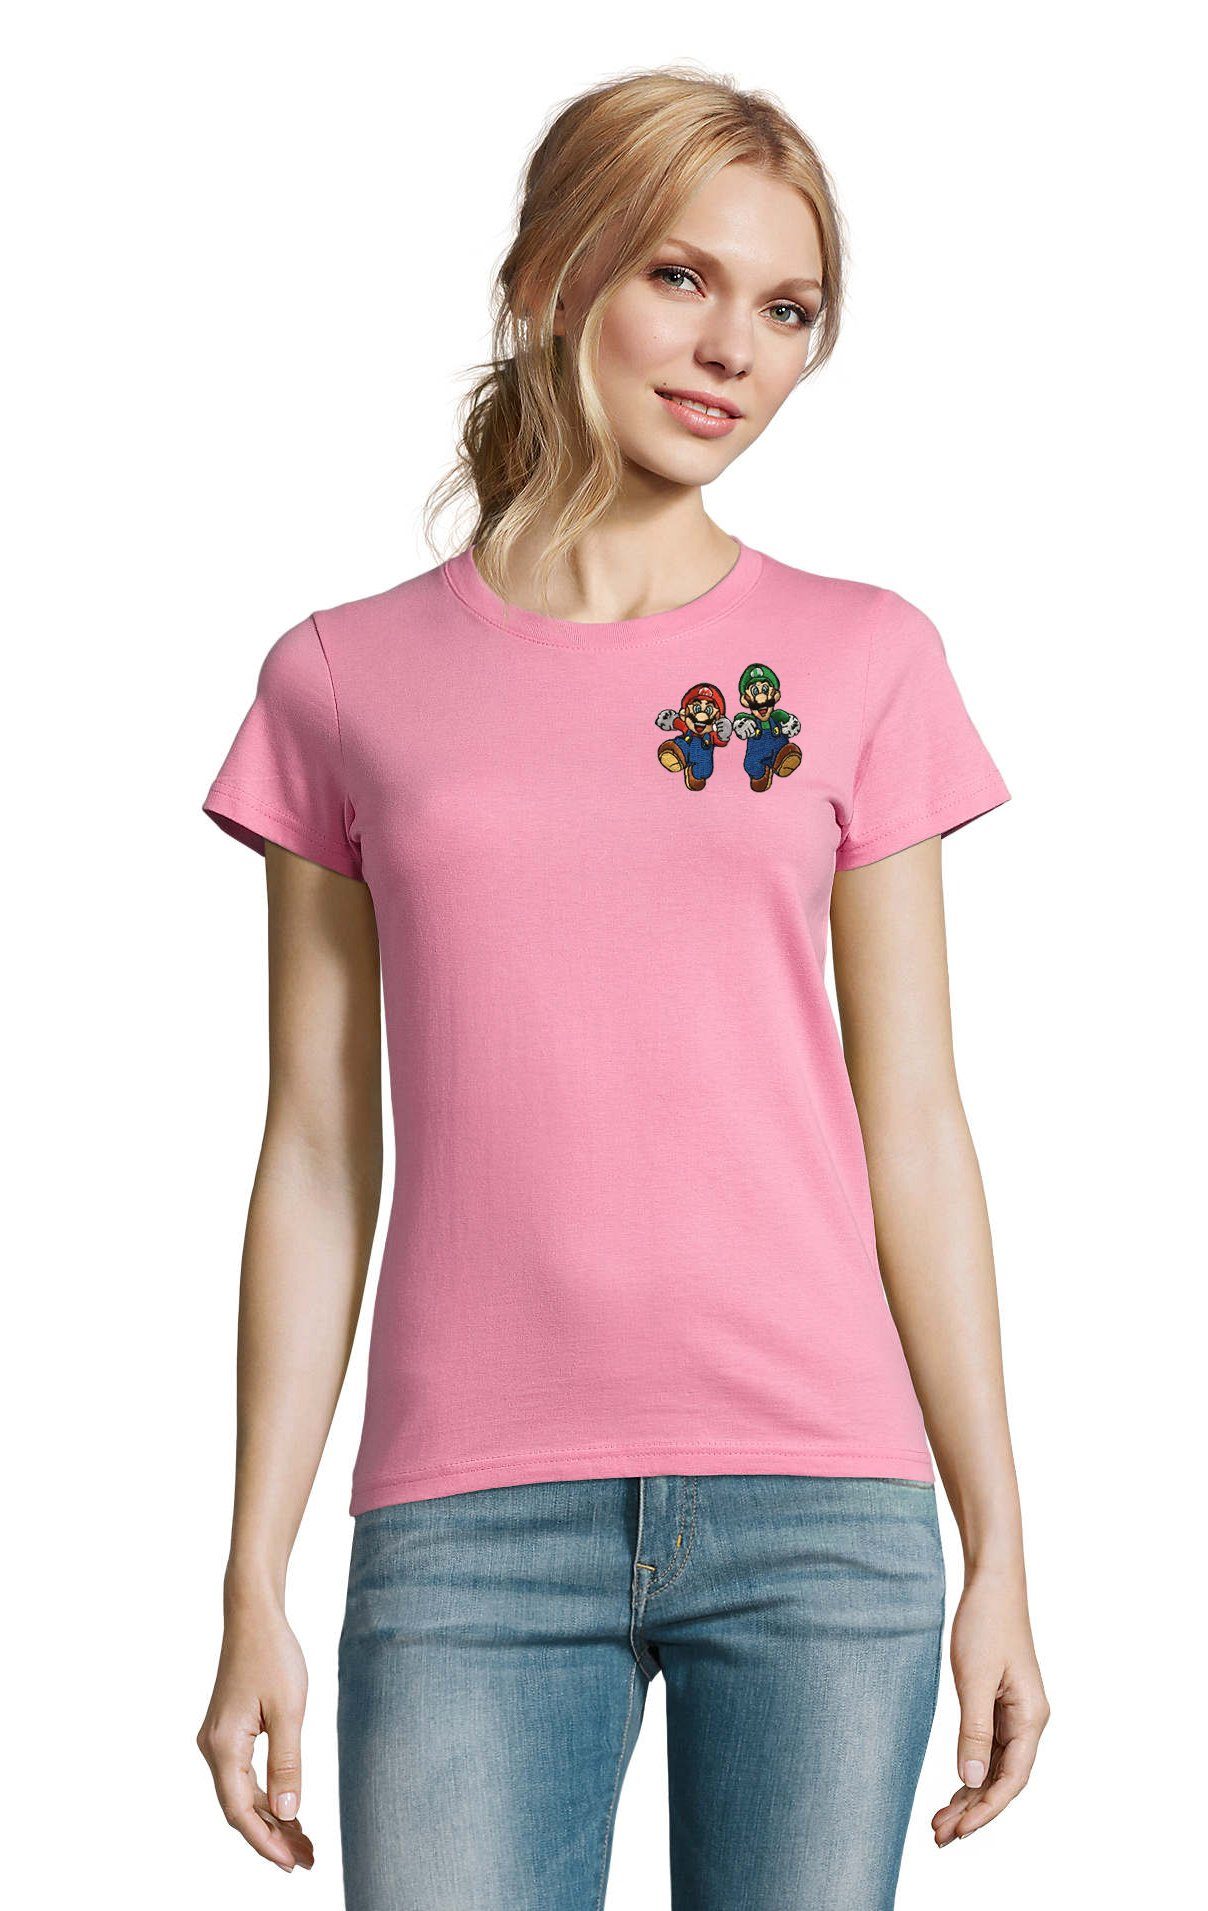 Blondie & Brownie T-Shirt Damen Mario & Luigi Brust Stick Yoshi Bowser Nintendo Gaming bestickt Rosa